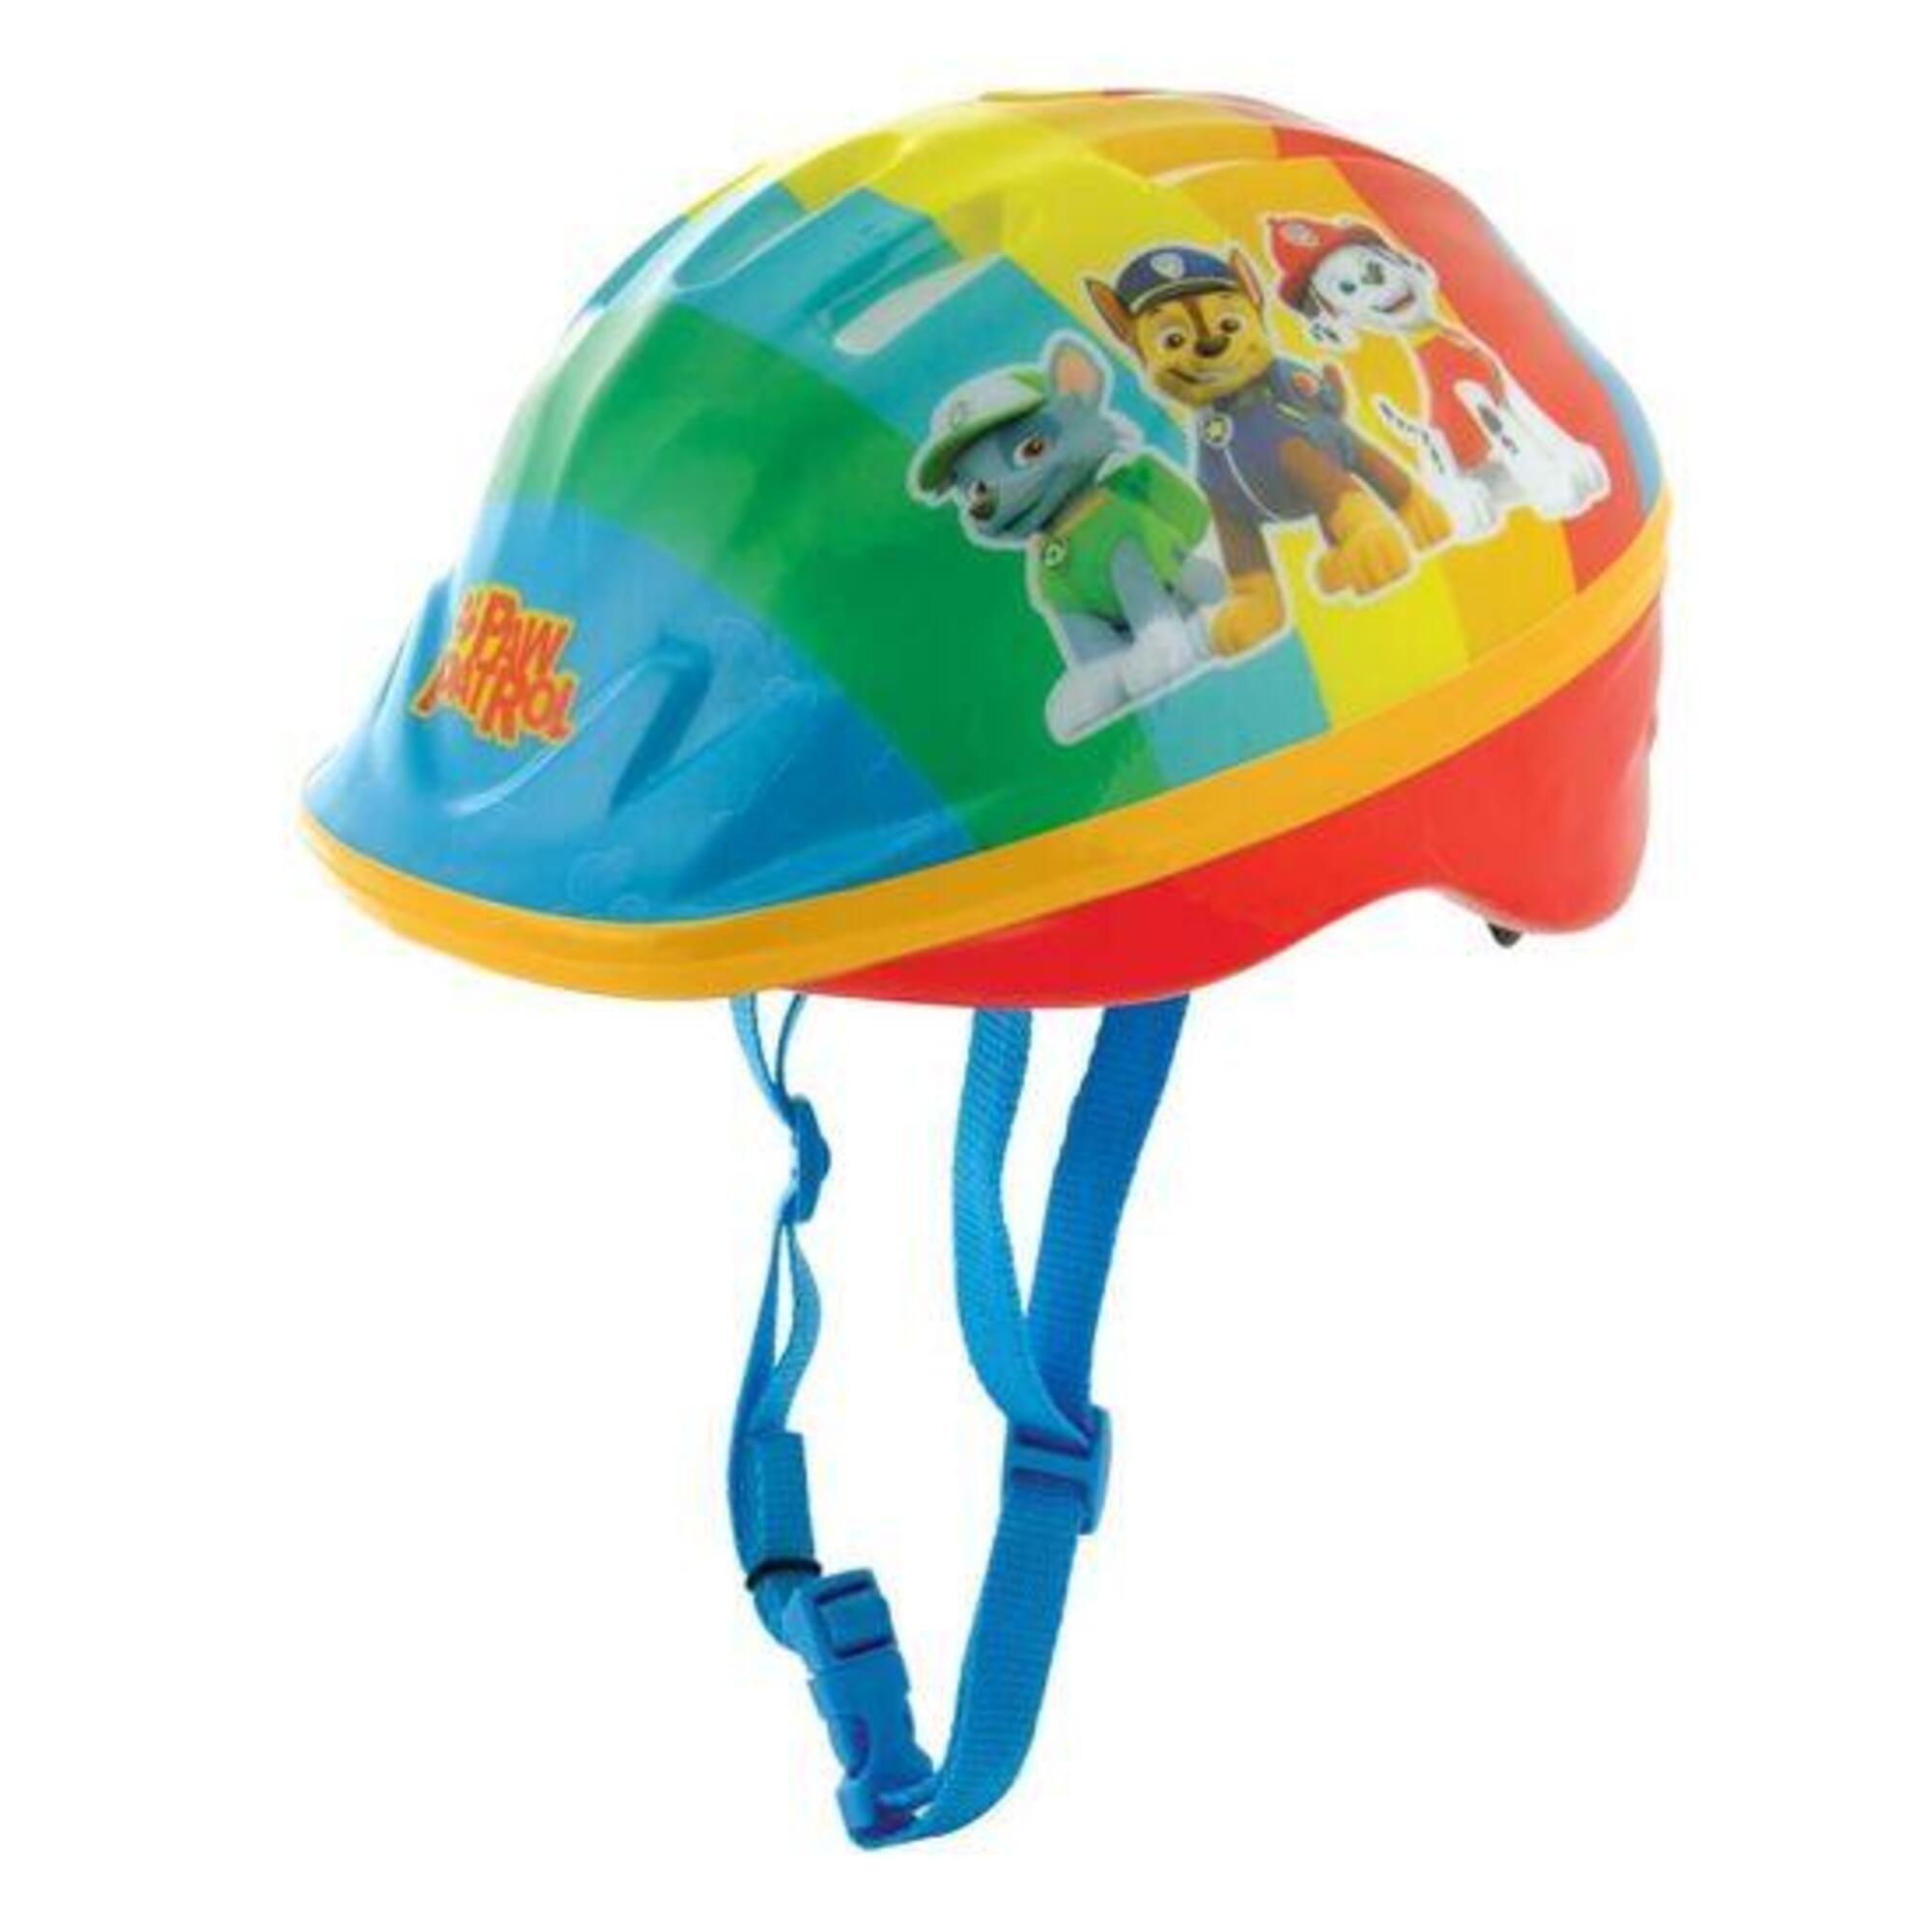 Paw Patrol Safety Helmet - 48-52cm 4/5